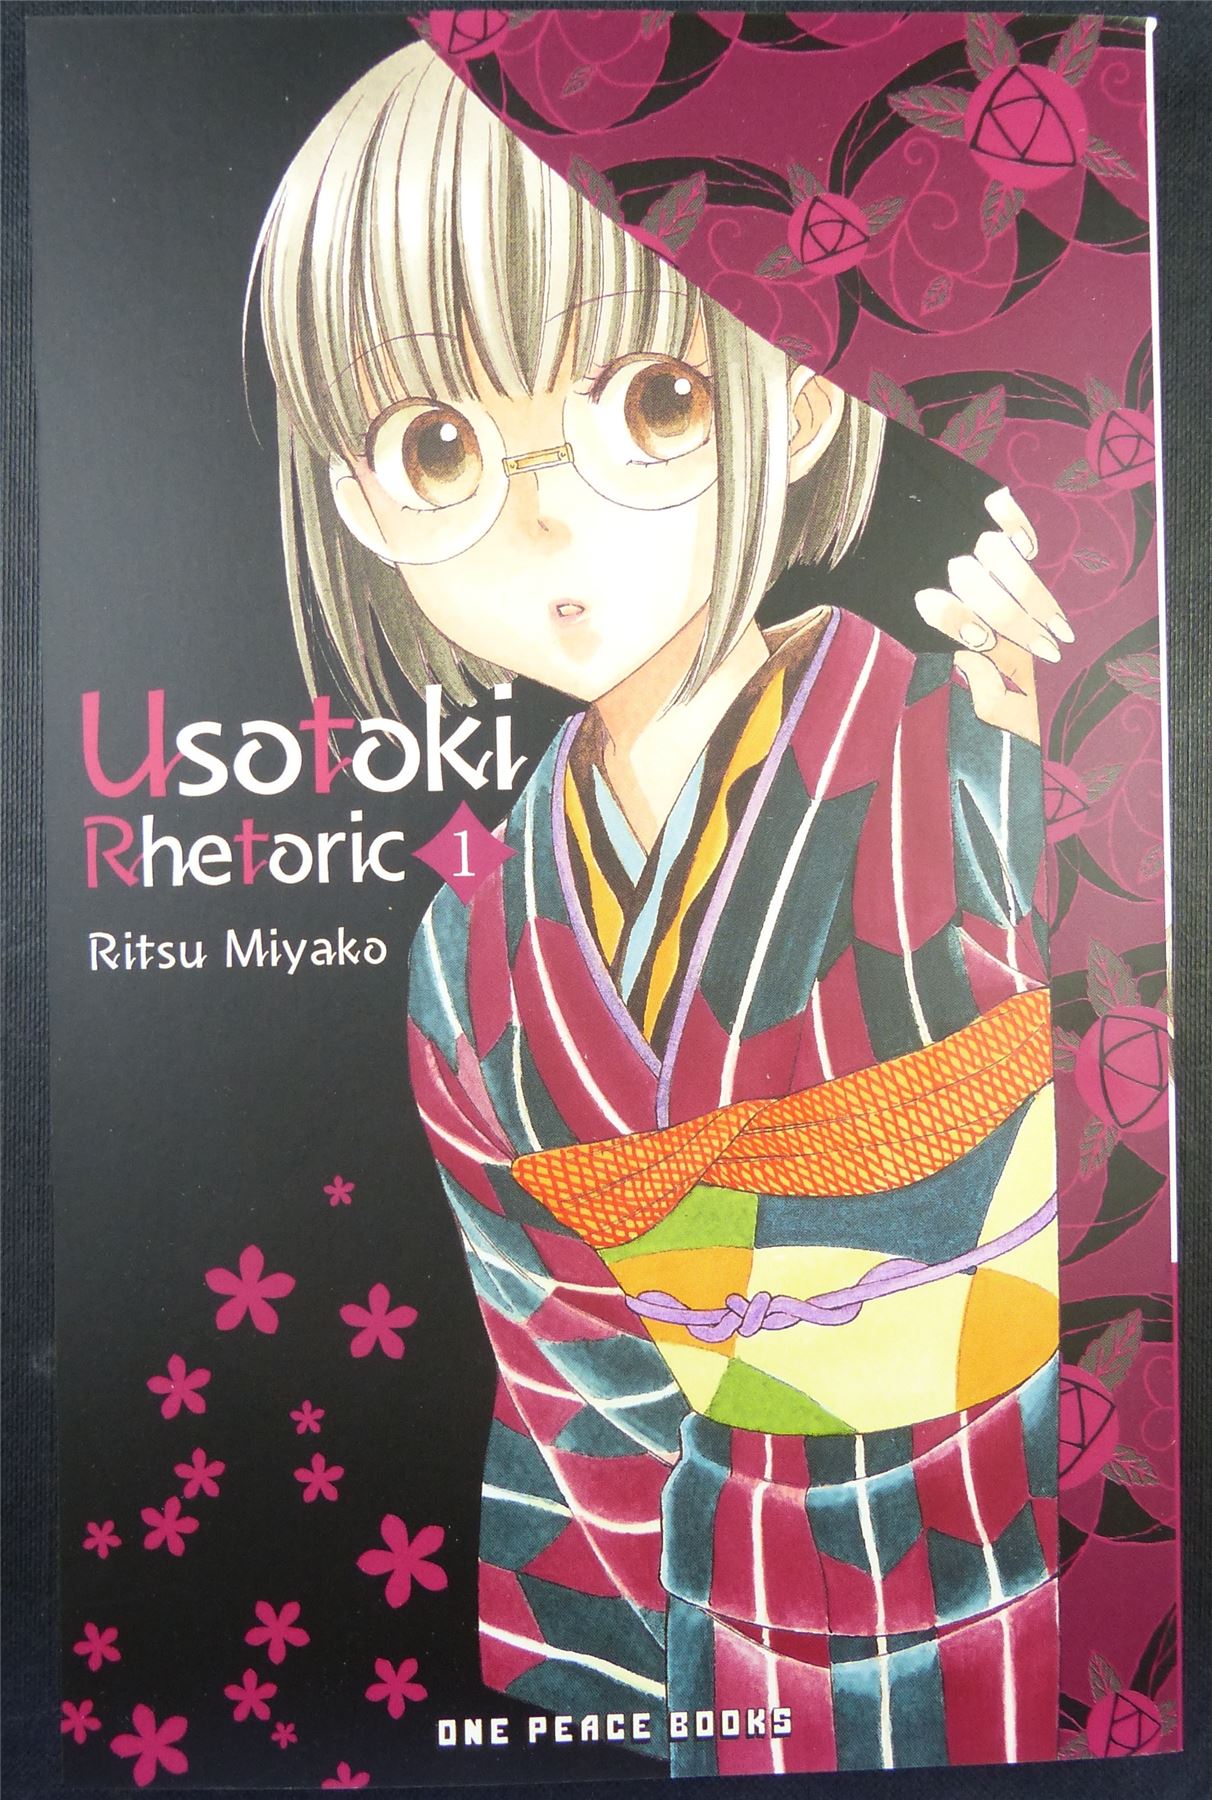 USOTOKI Rhetoric vol 1 - One Peace Manga #7Z